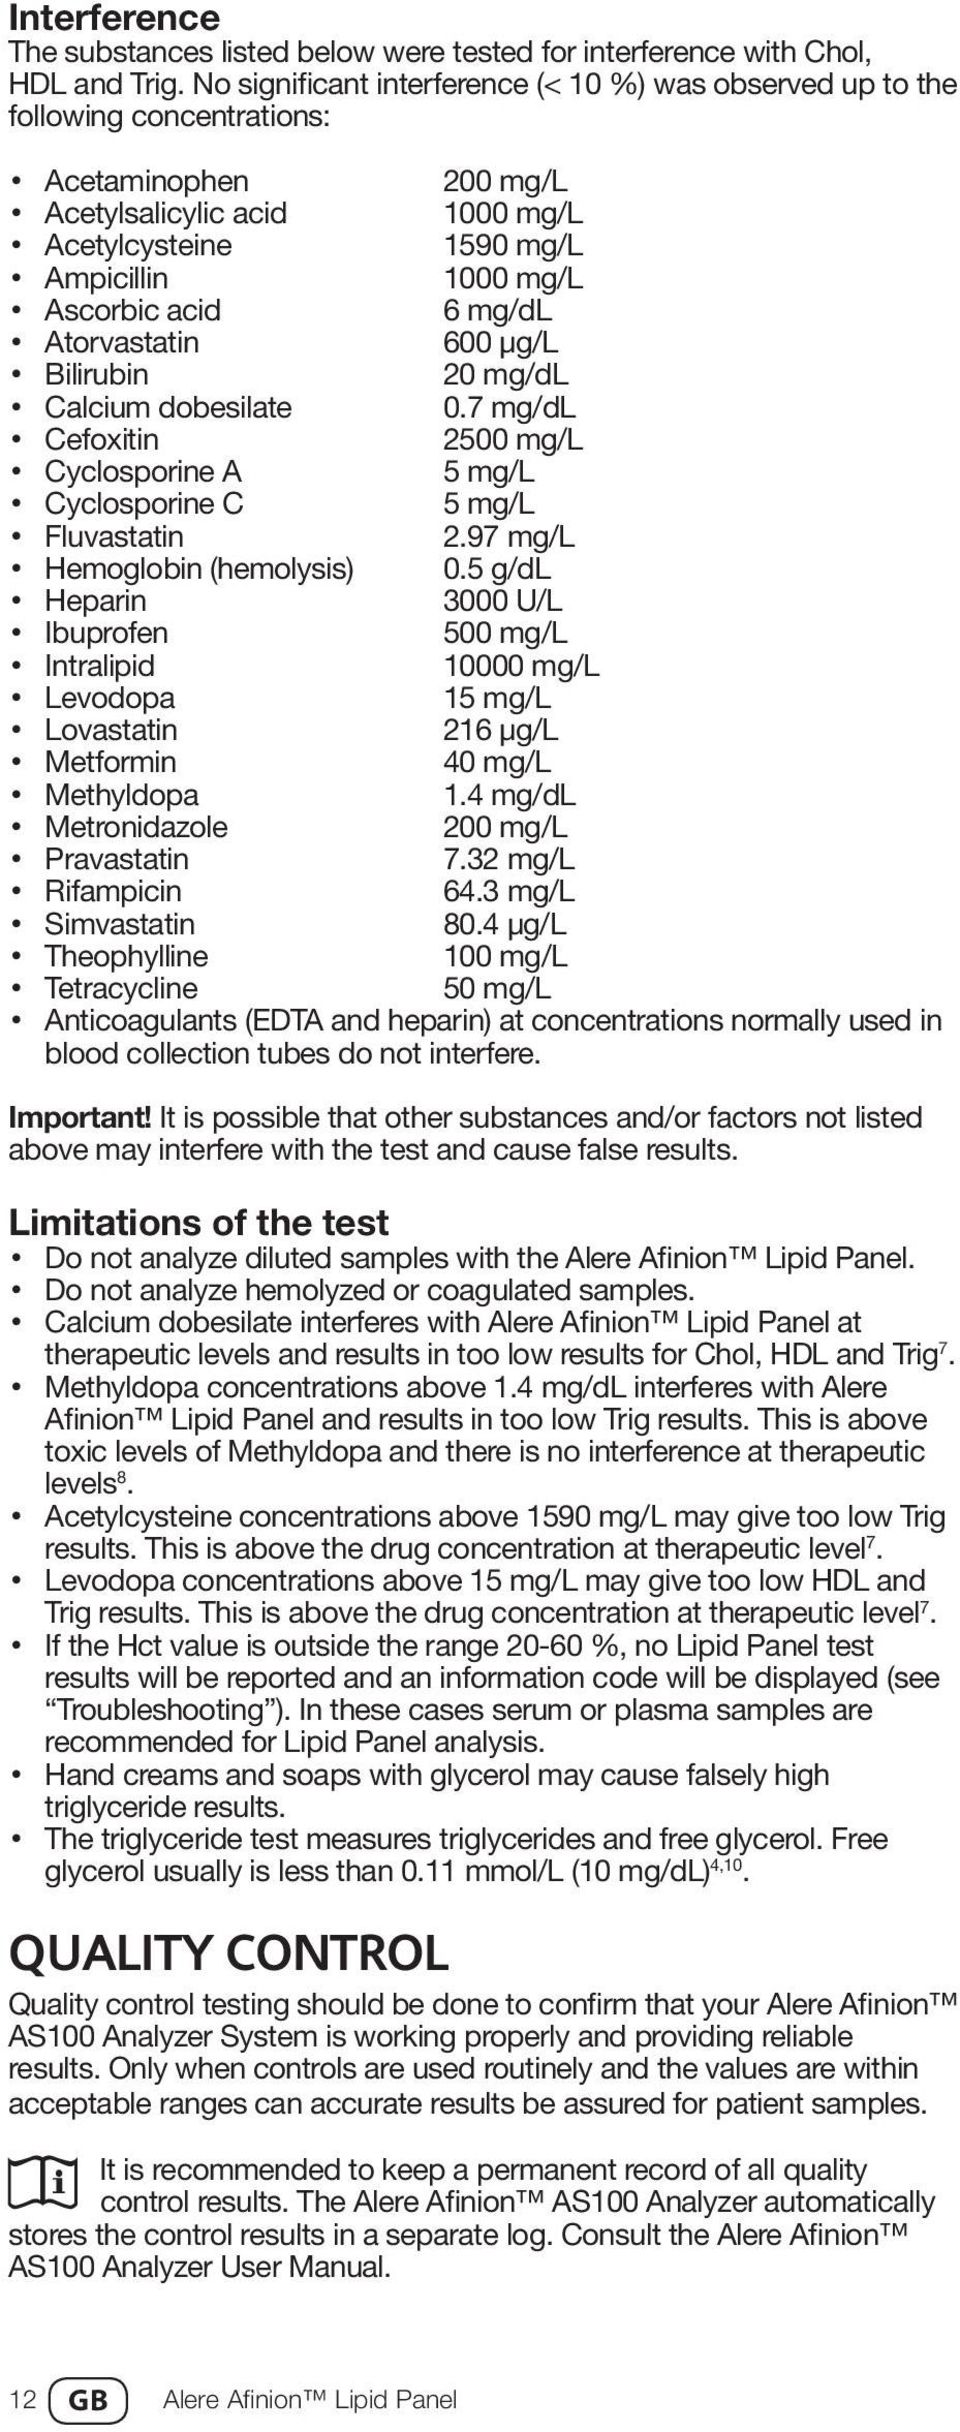 6 mg/dl Atorvastatin 600 µg/l Bilirubin 20 mg/dl Calcium dobesilate 0.7 mg/dl Cefoxitin 2500 mg/l Cyclosporine A 5 mg/l Cyclosporine C 5 mg/l Fluvastatin 2.97 mg/l Hemoglobin (hemolysis) 0.